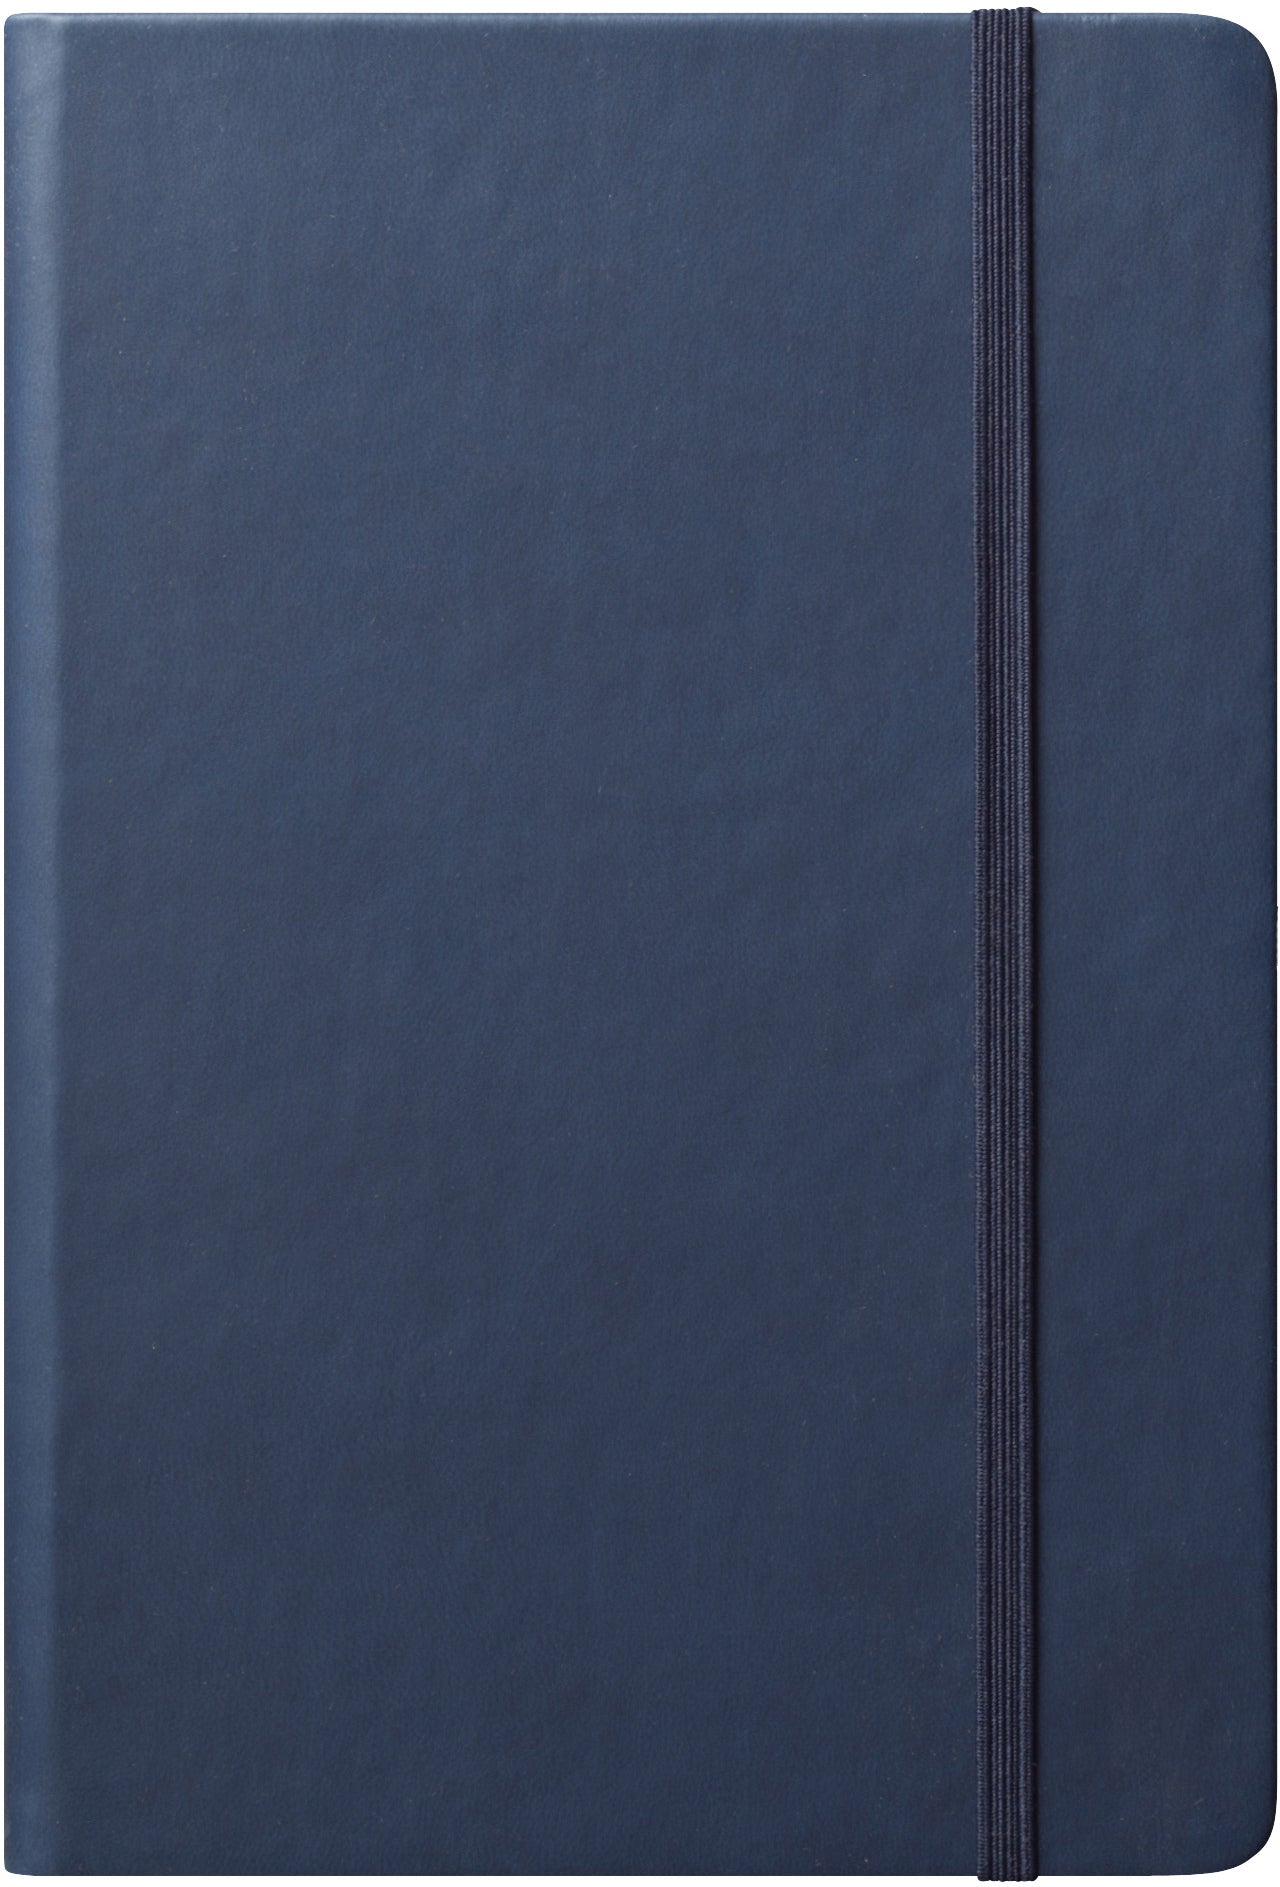 Medium Hard Cover Journal